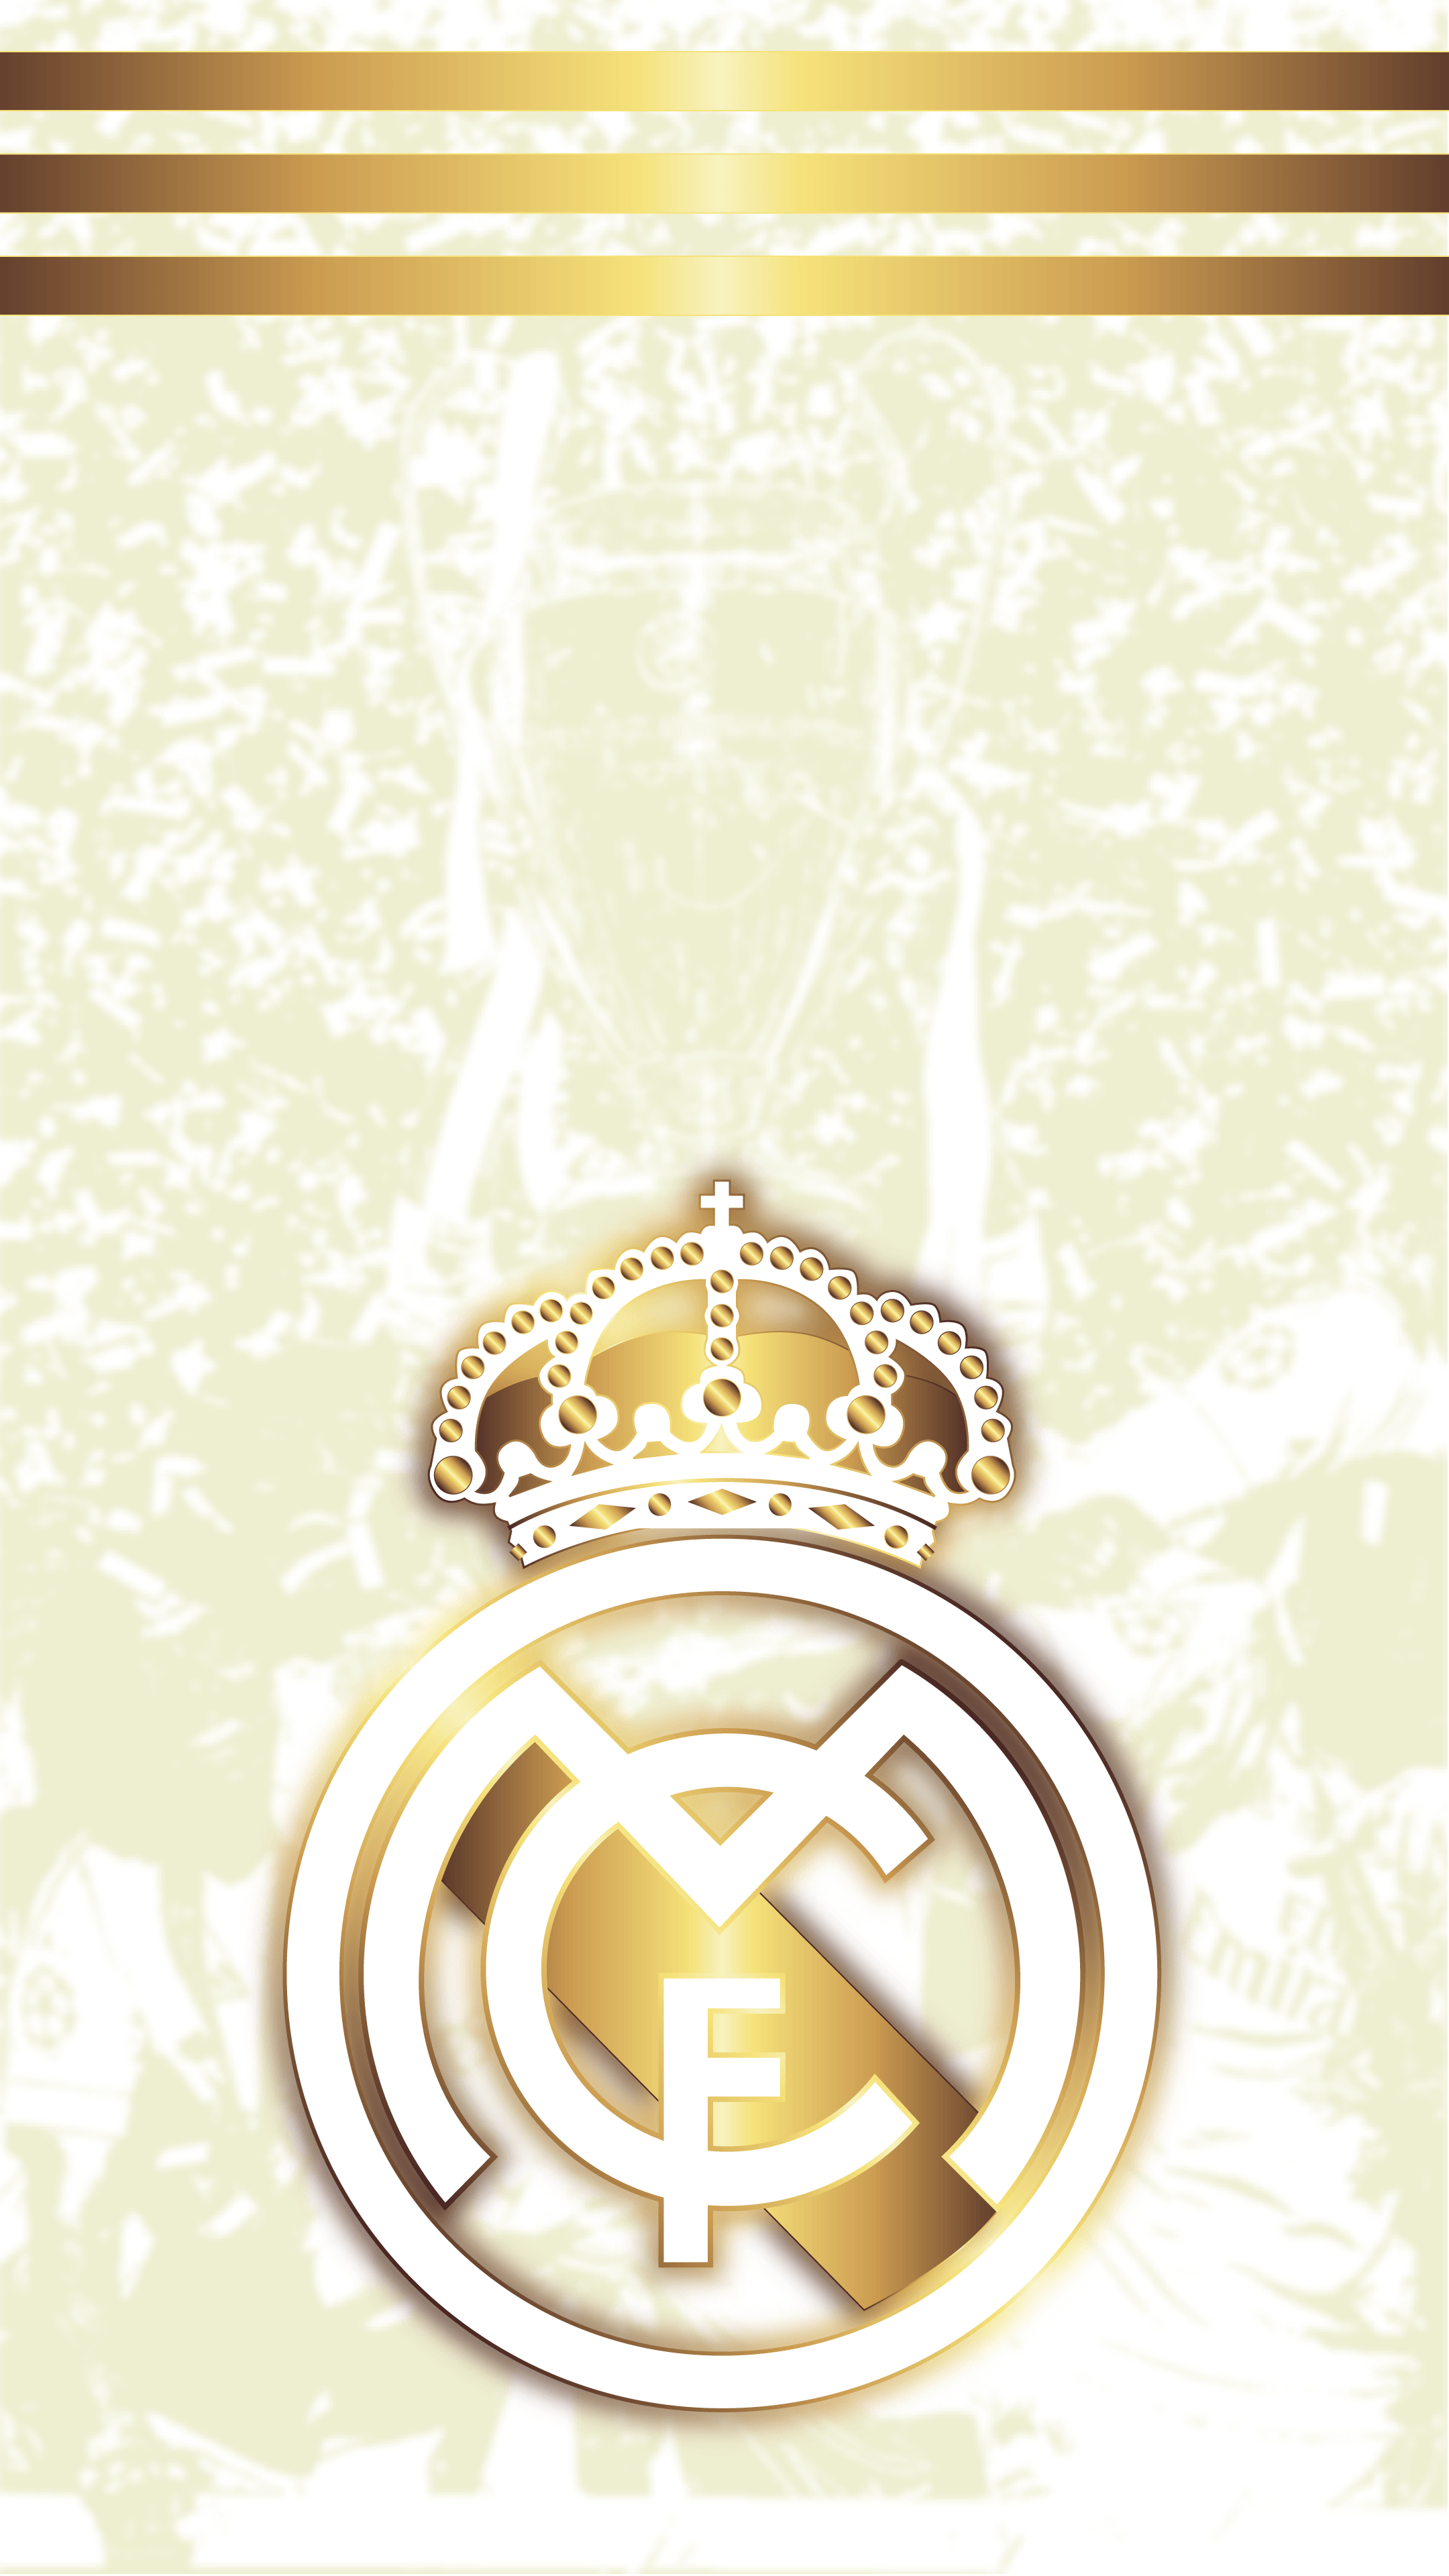 Real Madrid 2019 20 Wallpaper